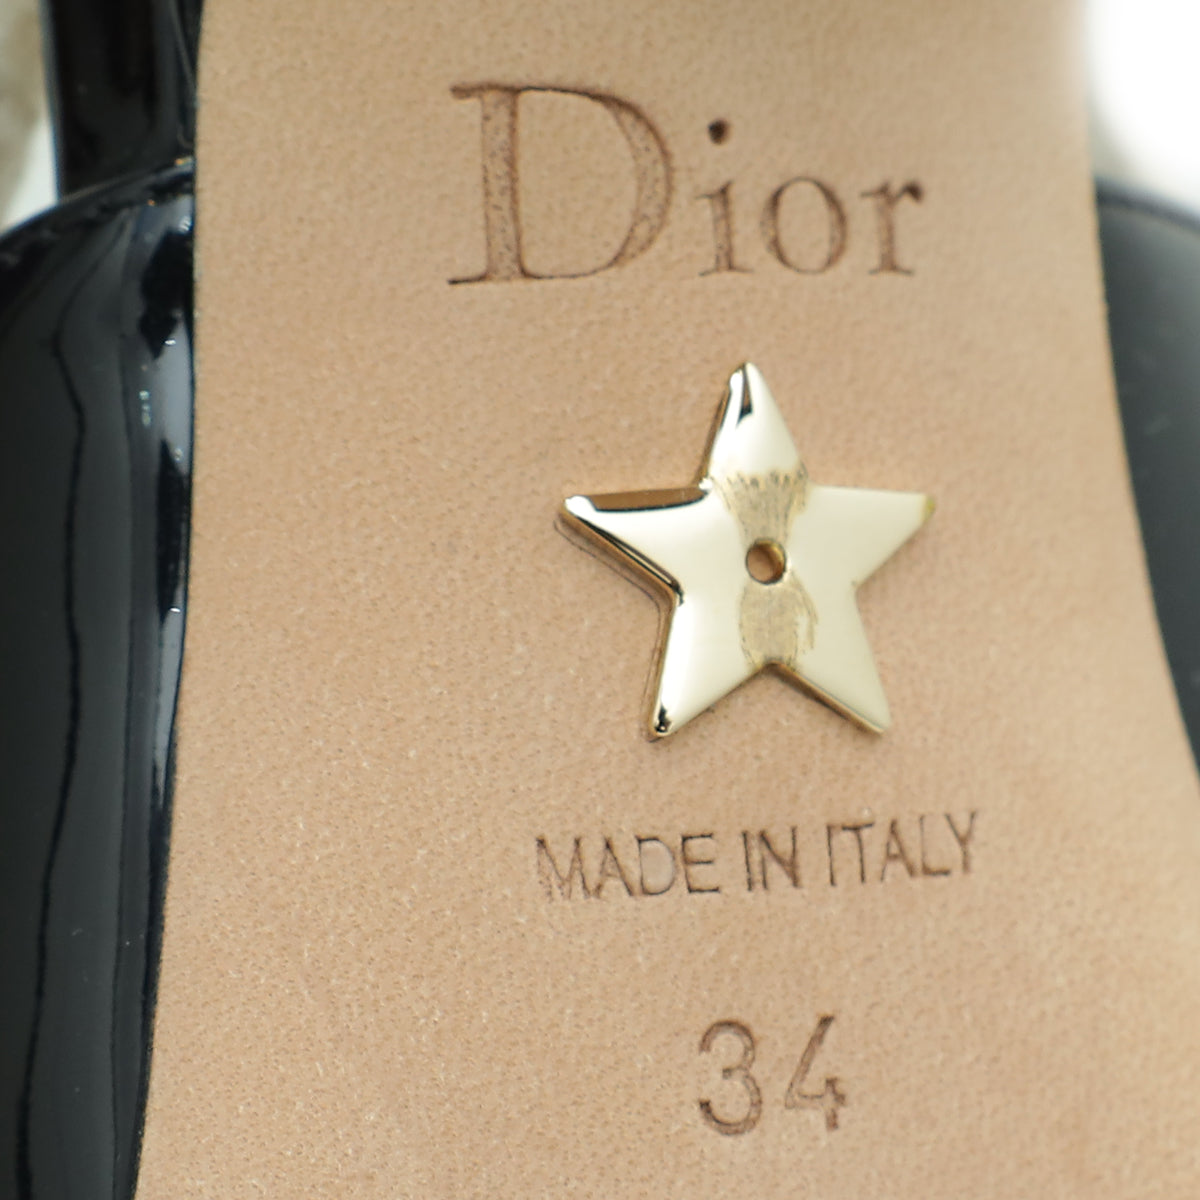 Christian Dior Black J'adior Slingback Pump 34